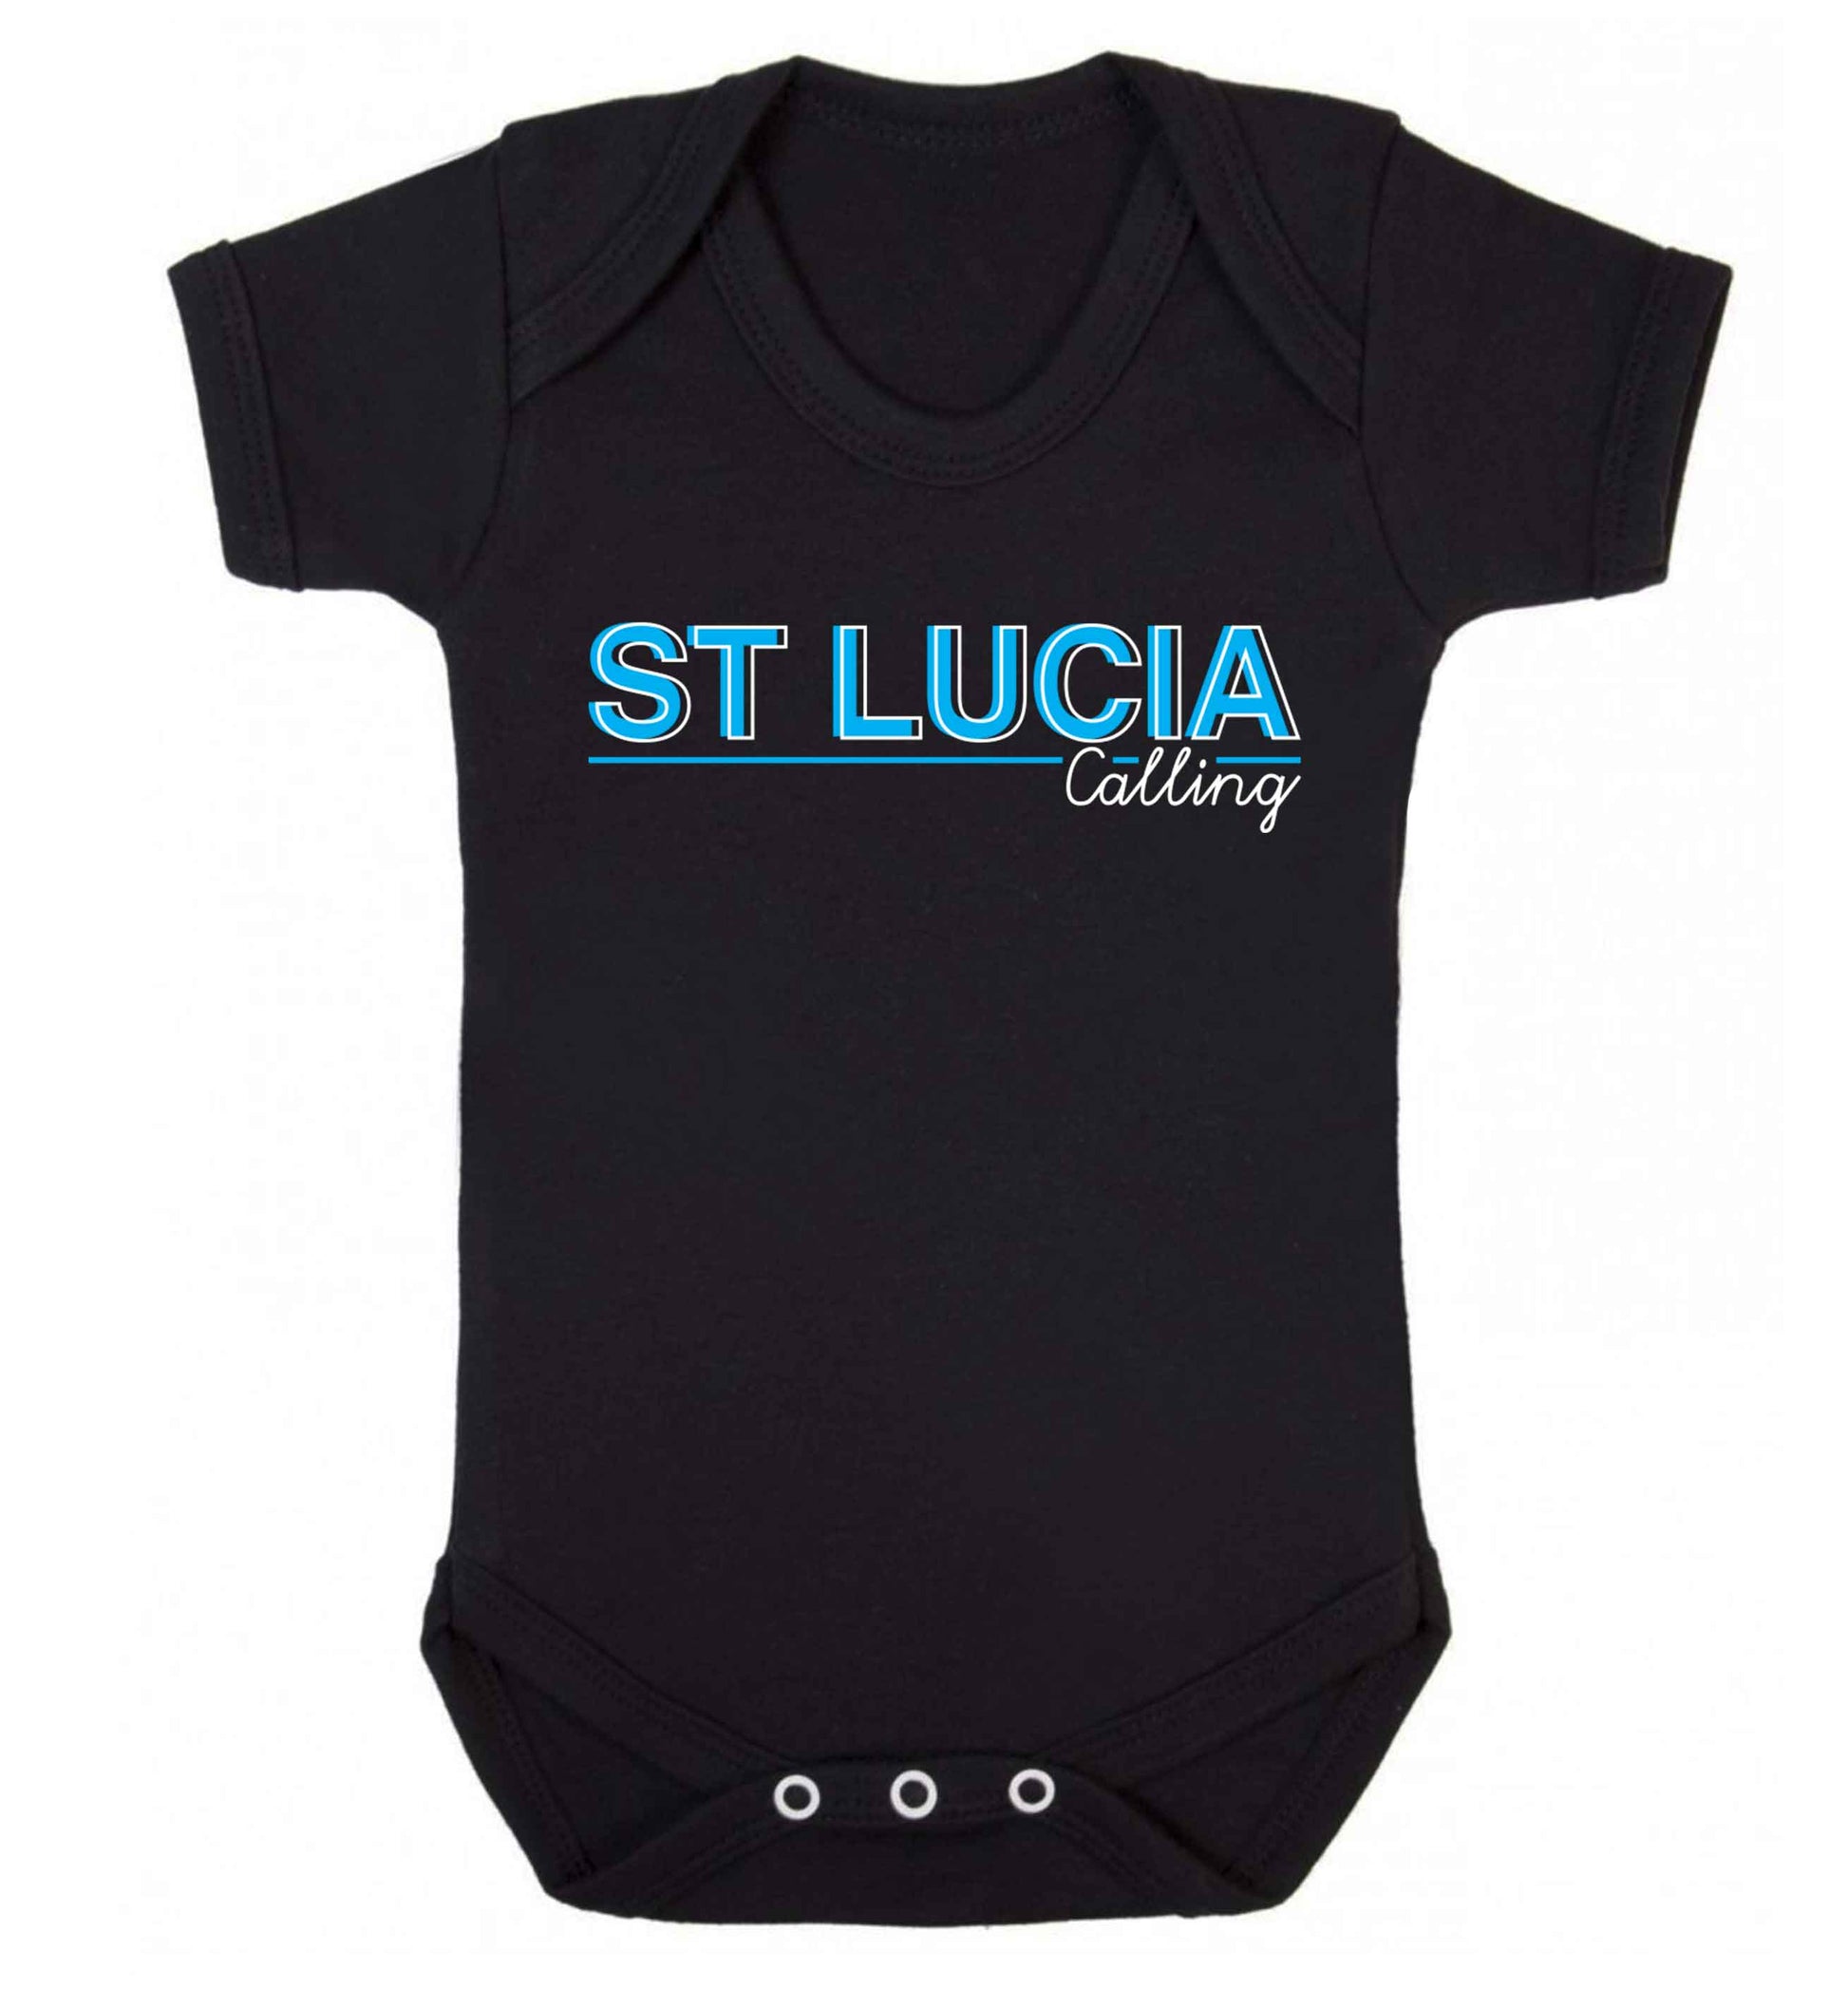 St Lucia calling Baby Vest black 18-24 months